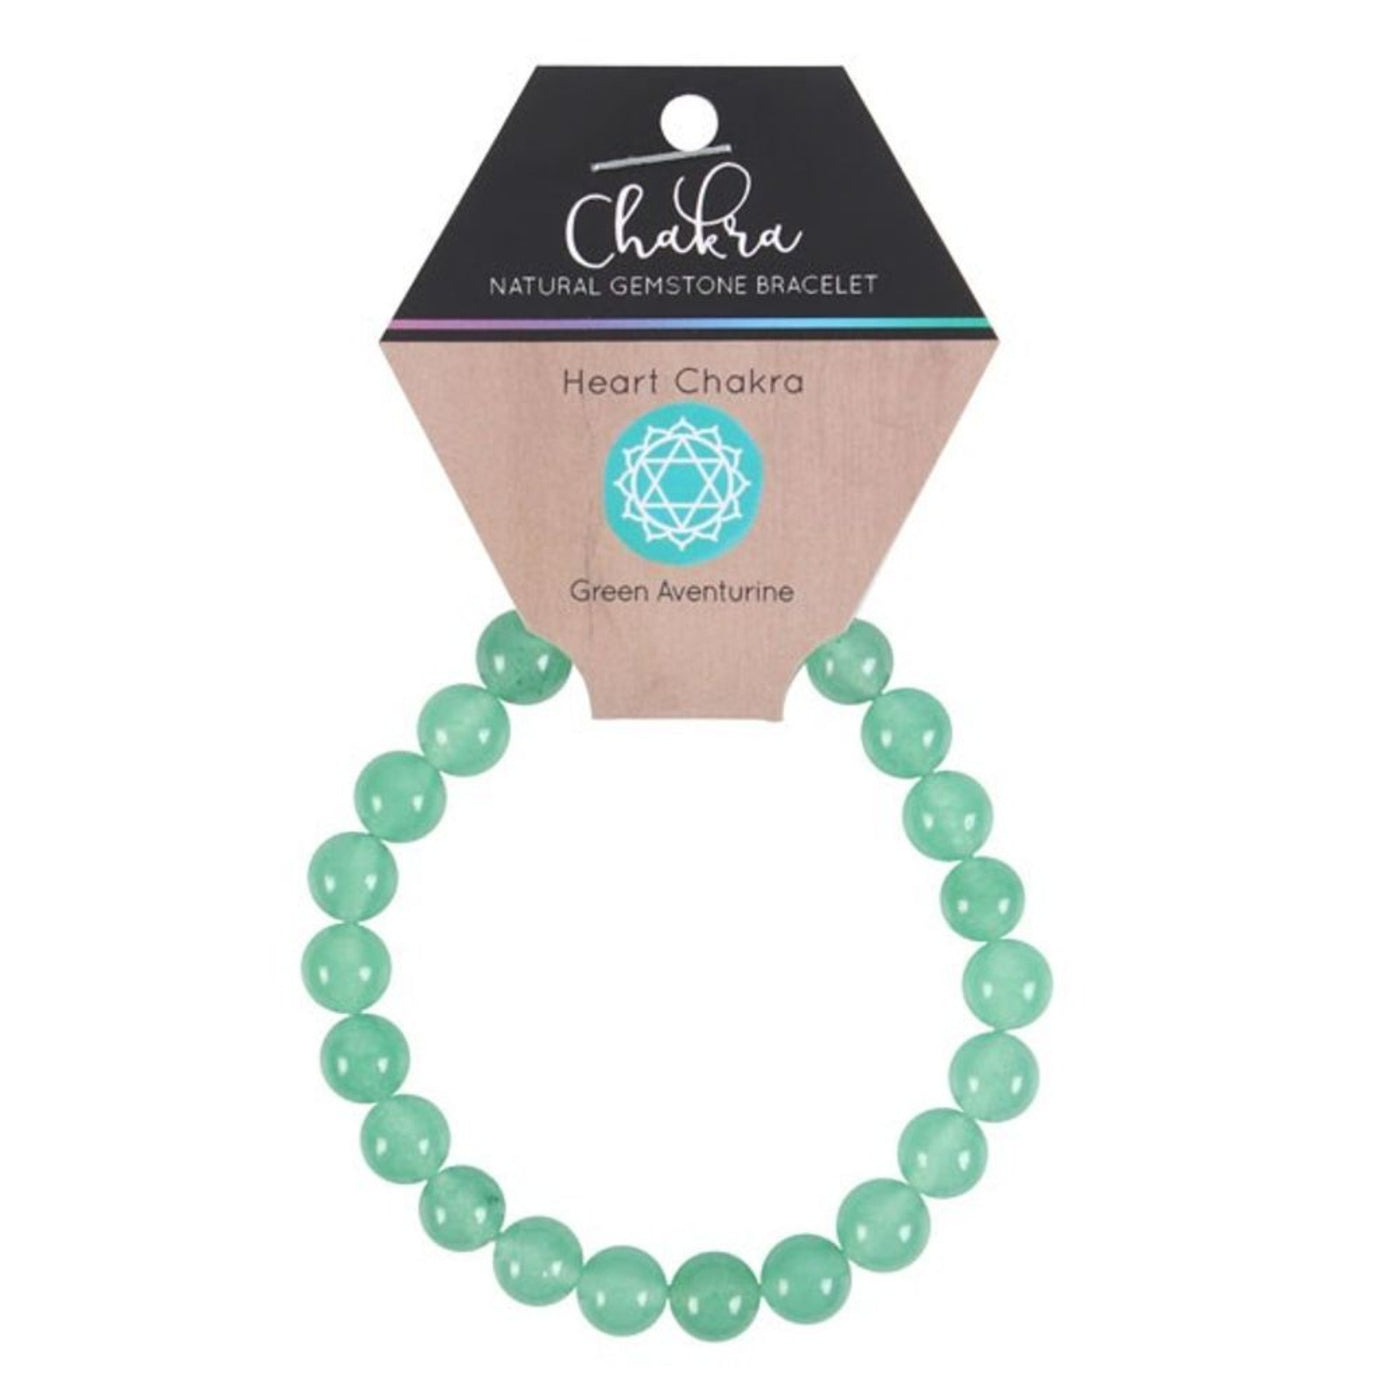 Unisex Heart Chakra Green Aventurine Gemstone Bracelet.